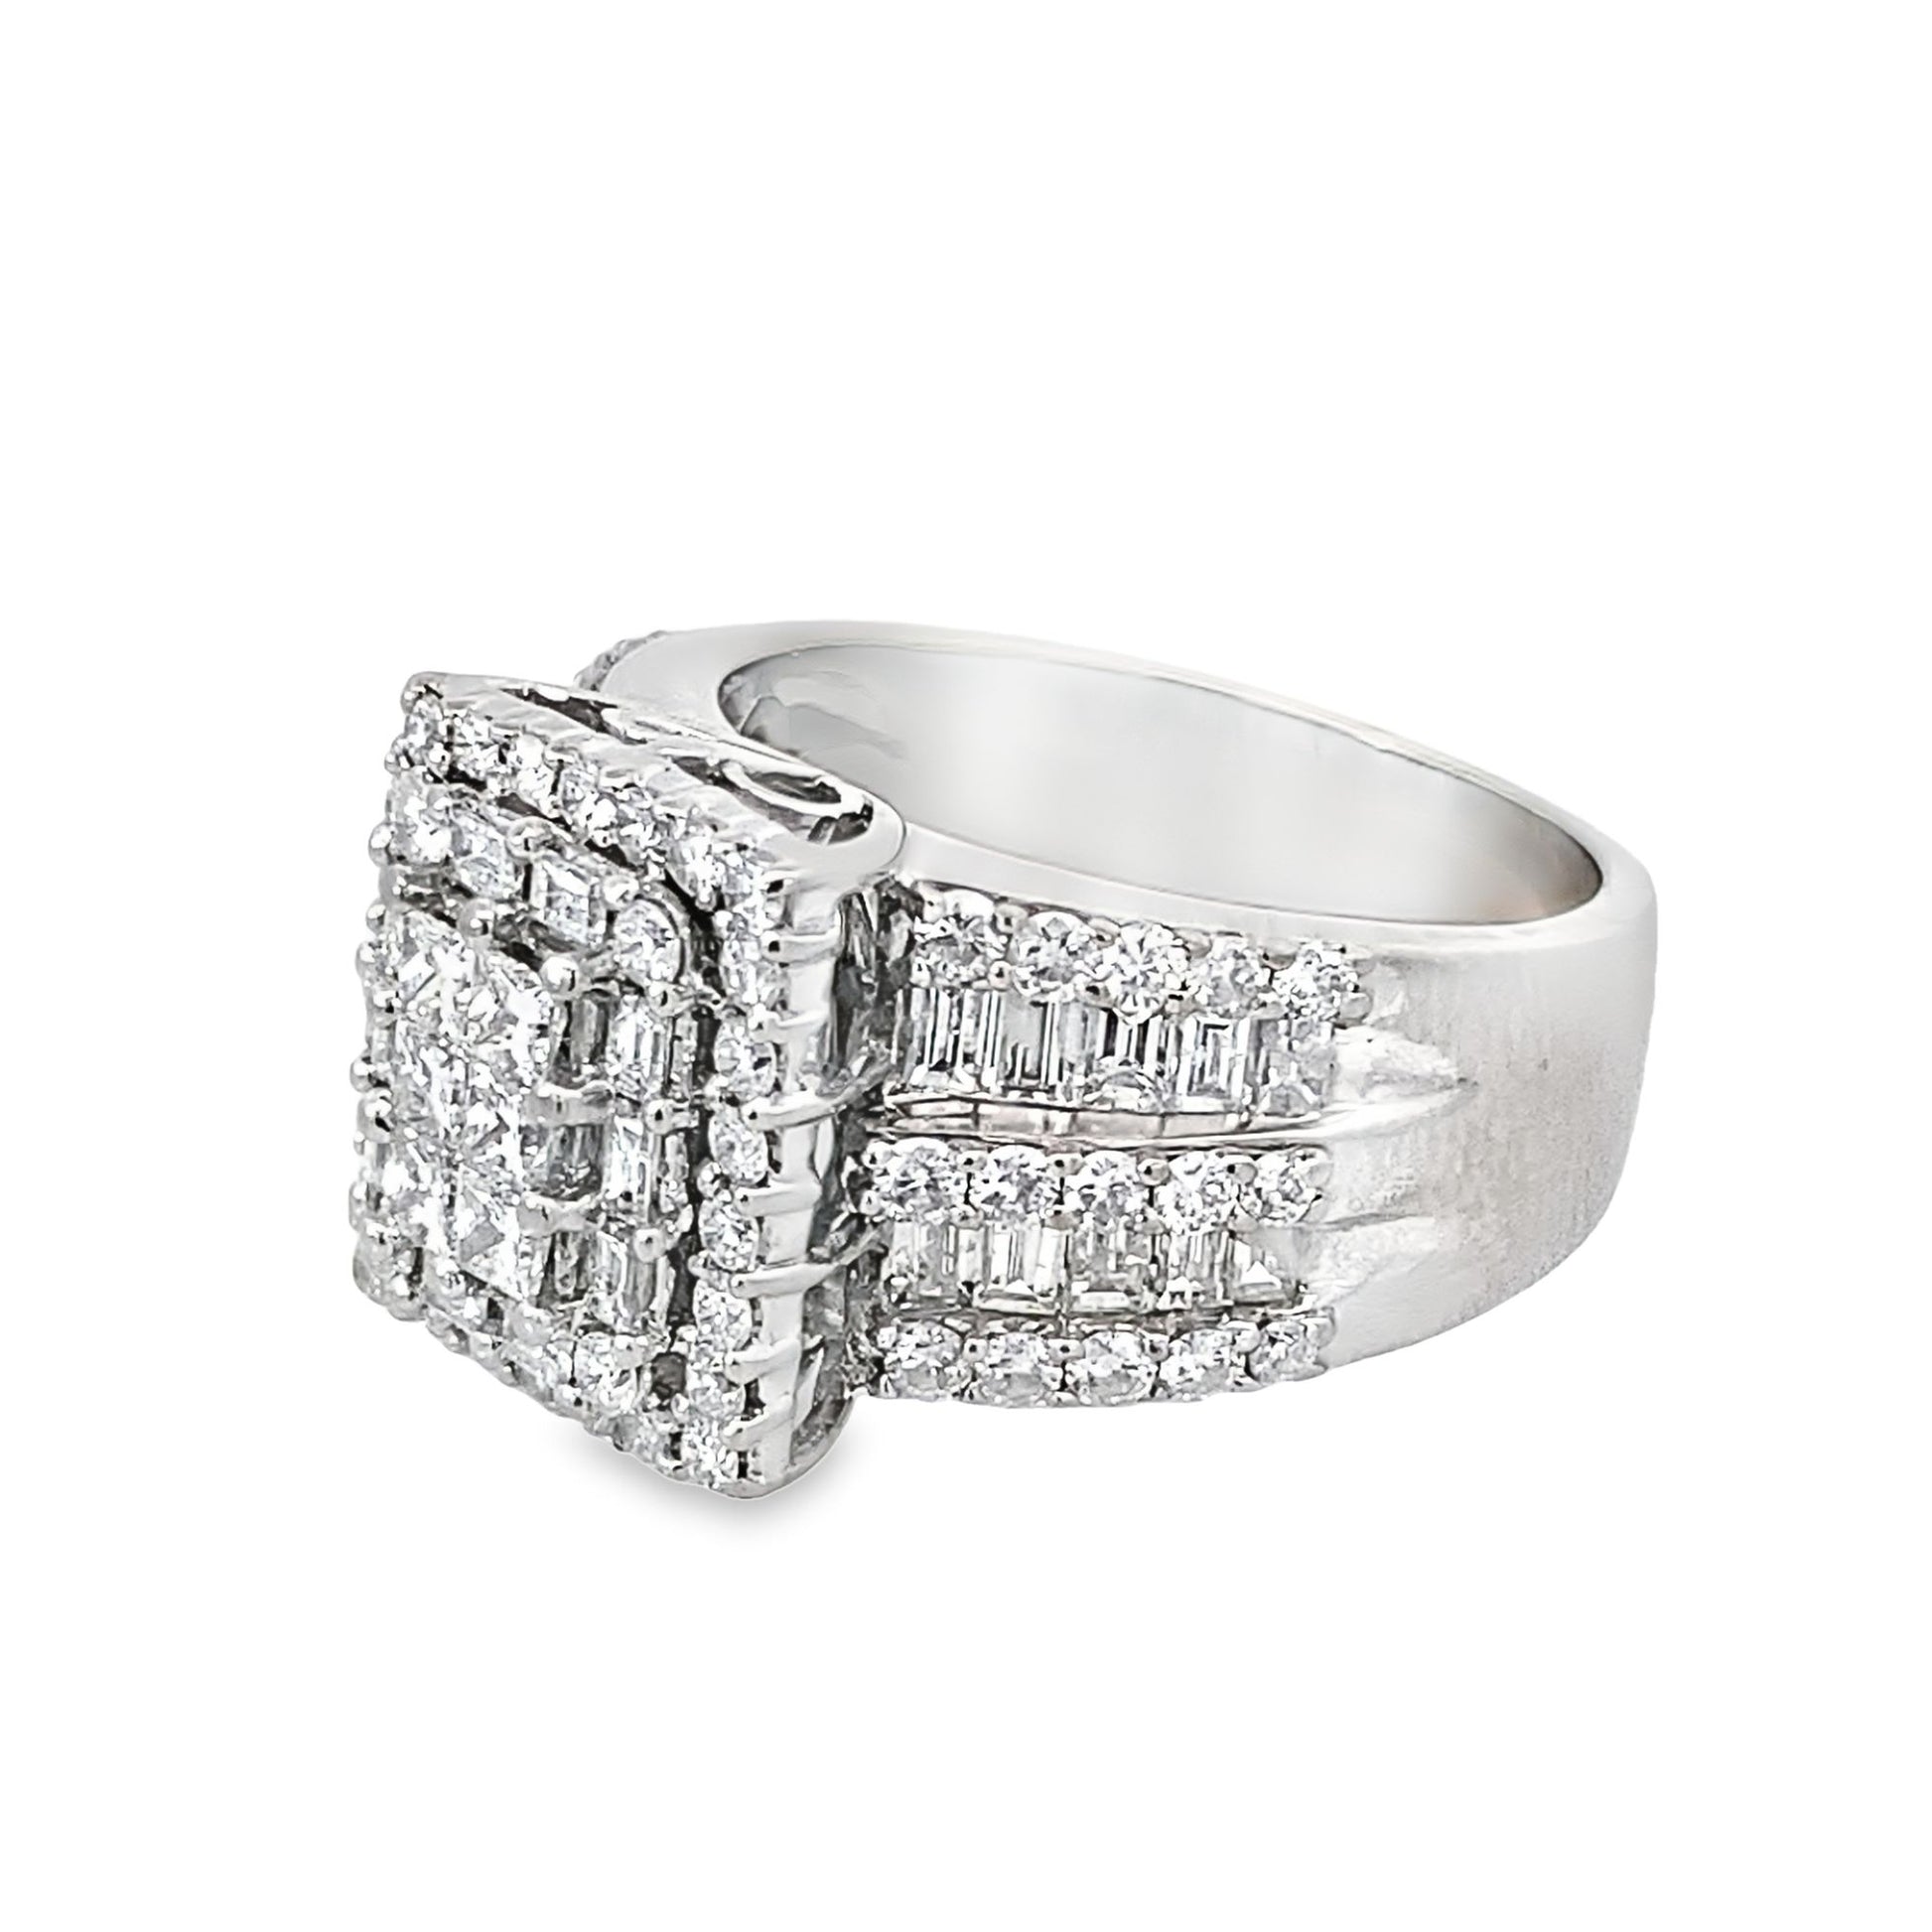 14K White Gold Diamond Engagement Ring Size 9 7.9Dwt